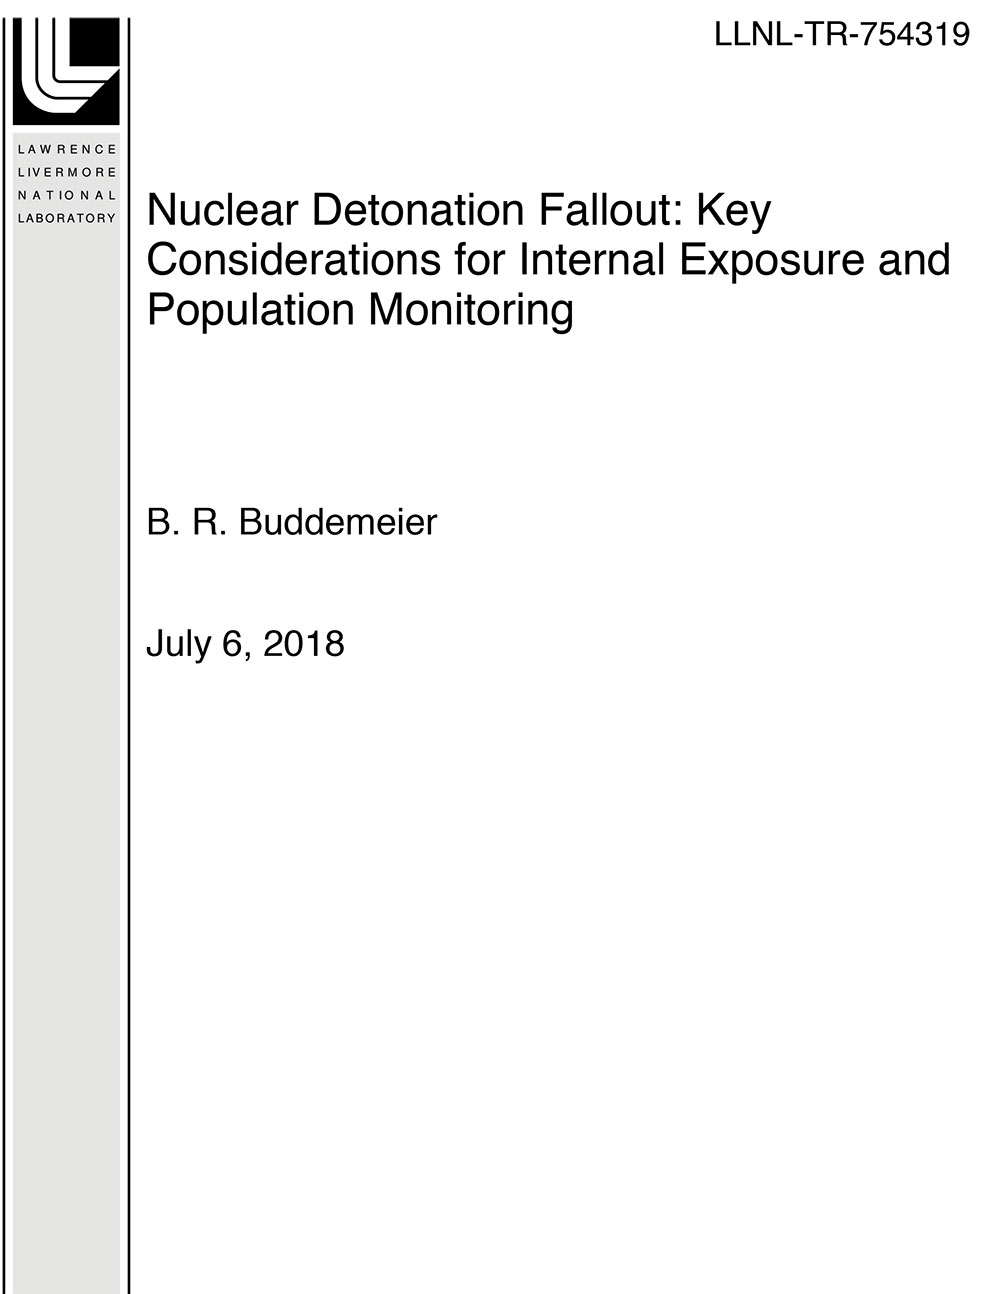 Nuclear Detonation Fallout, report cover